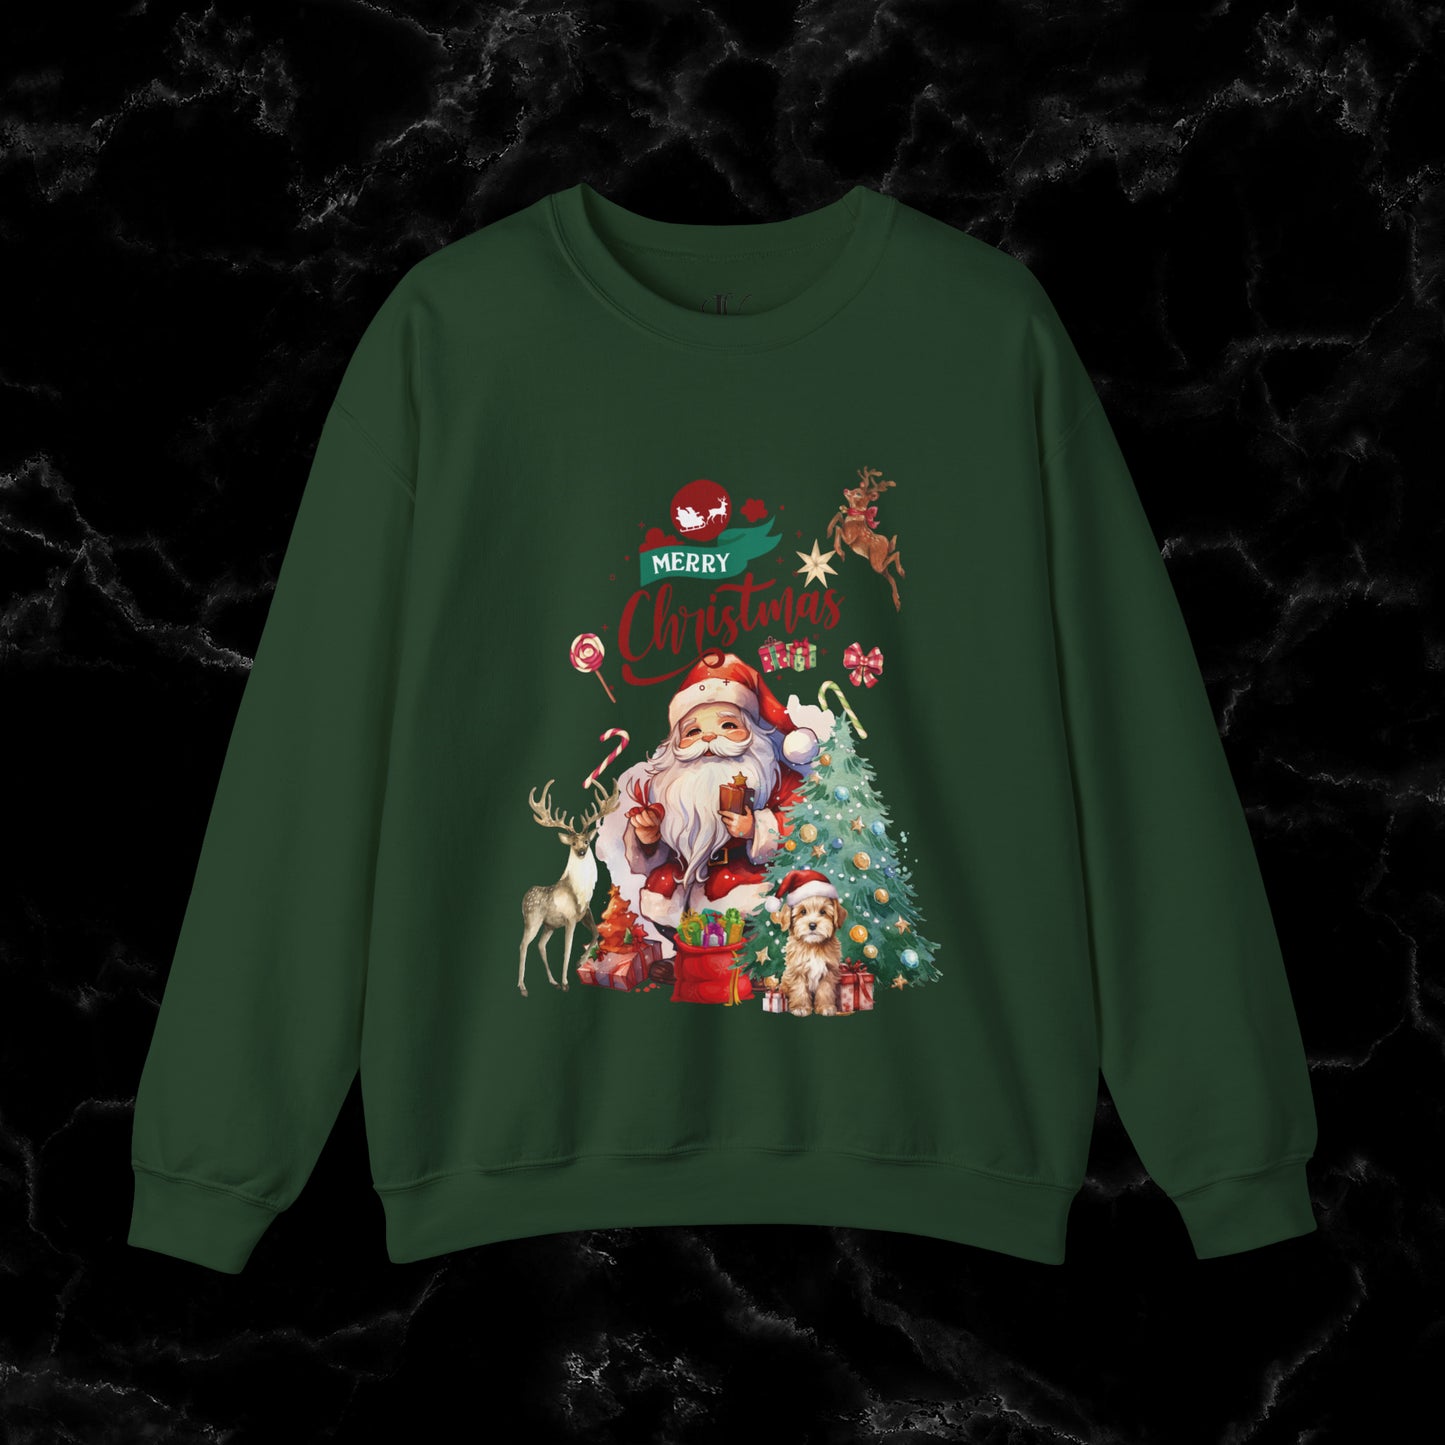 Merry Christmas Sweatshirt | Christmas Shirt - Matching Christmas Shirt - Santa Claus Merry Christmas Sweatshirt - Holiday Gift - Christmas Gift Sweatshirt S Forest Green 